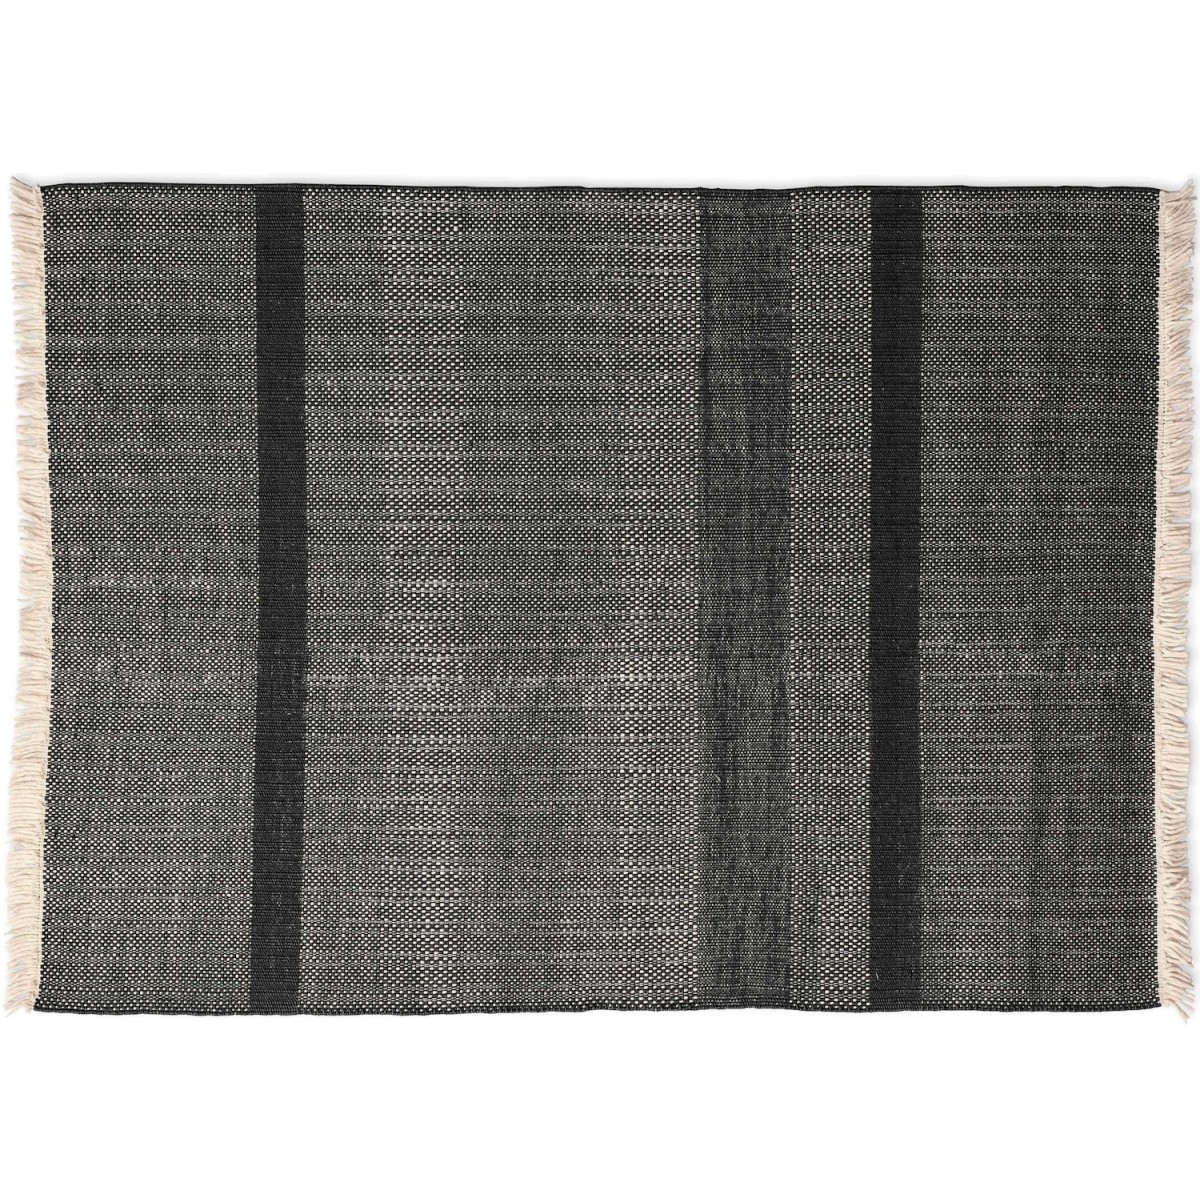 170x240cm - black - Tres Texture rug